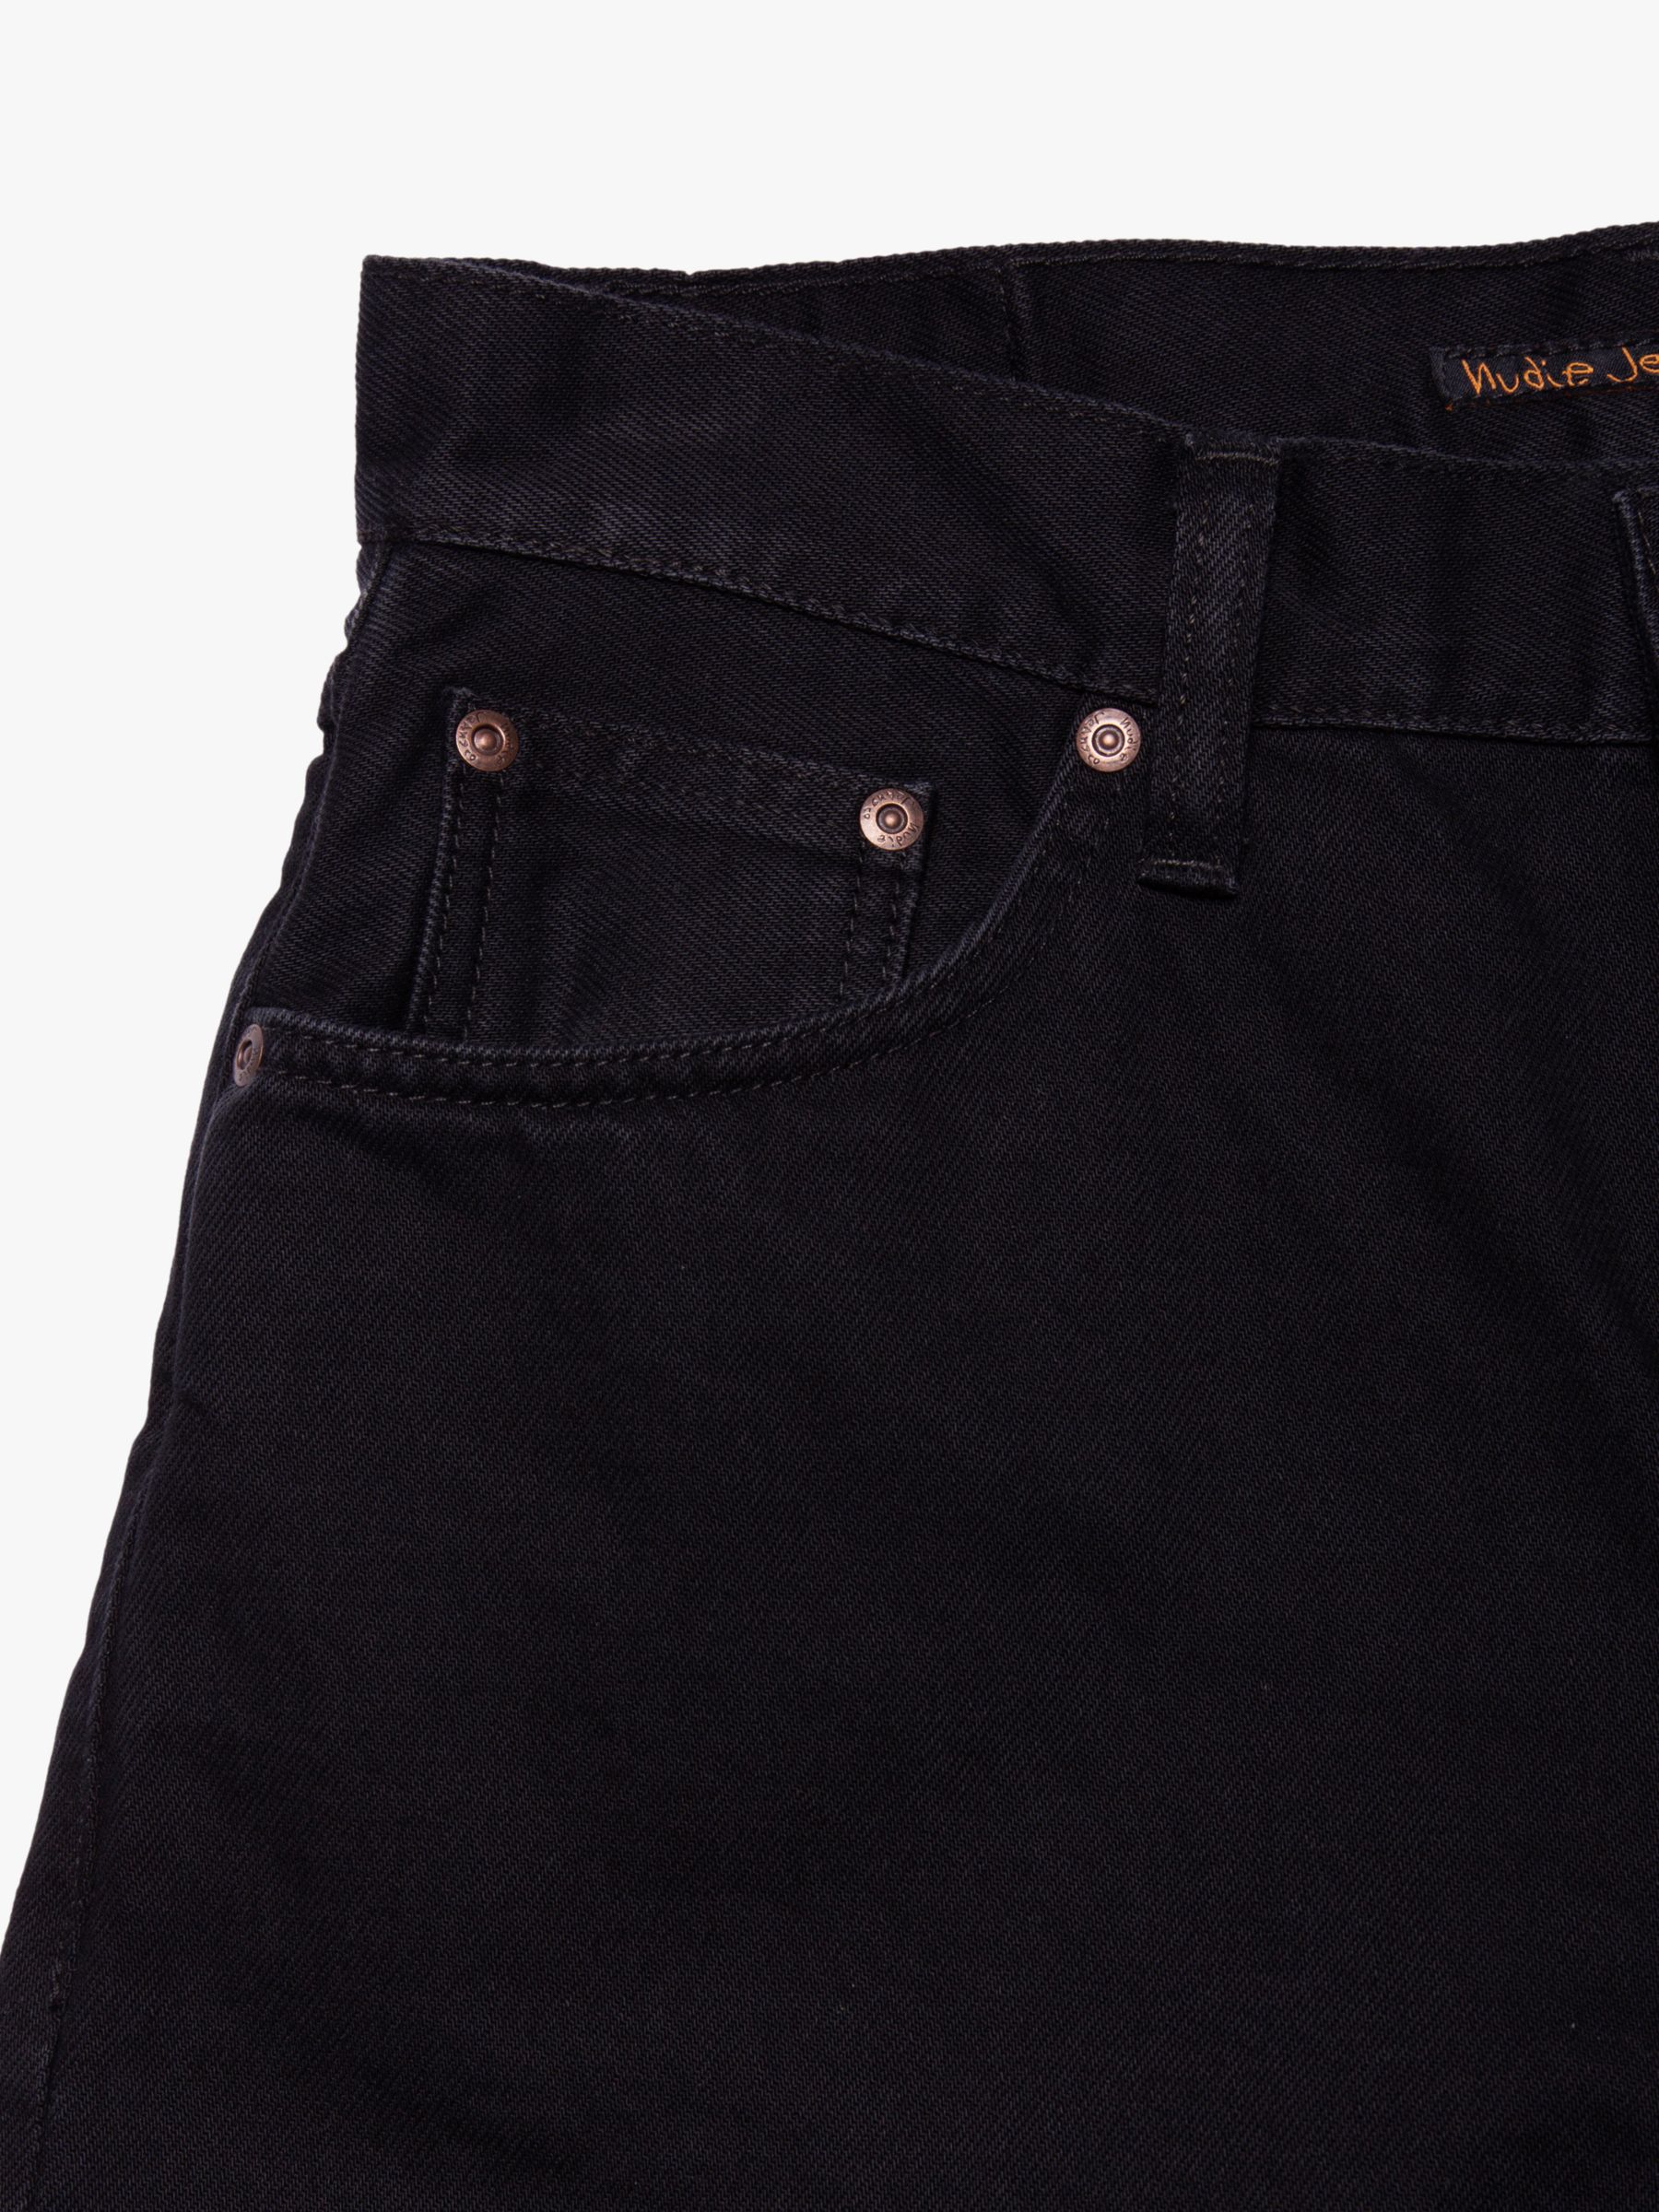 Nudie Jeans Seth Denim Shorts, Black, 30R